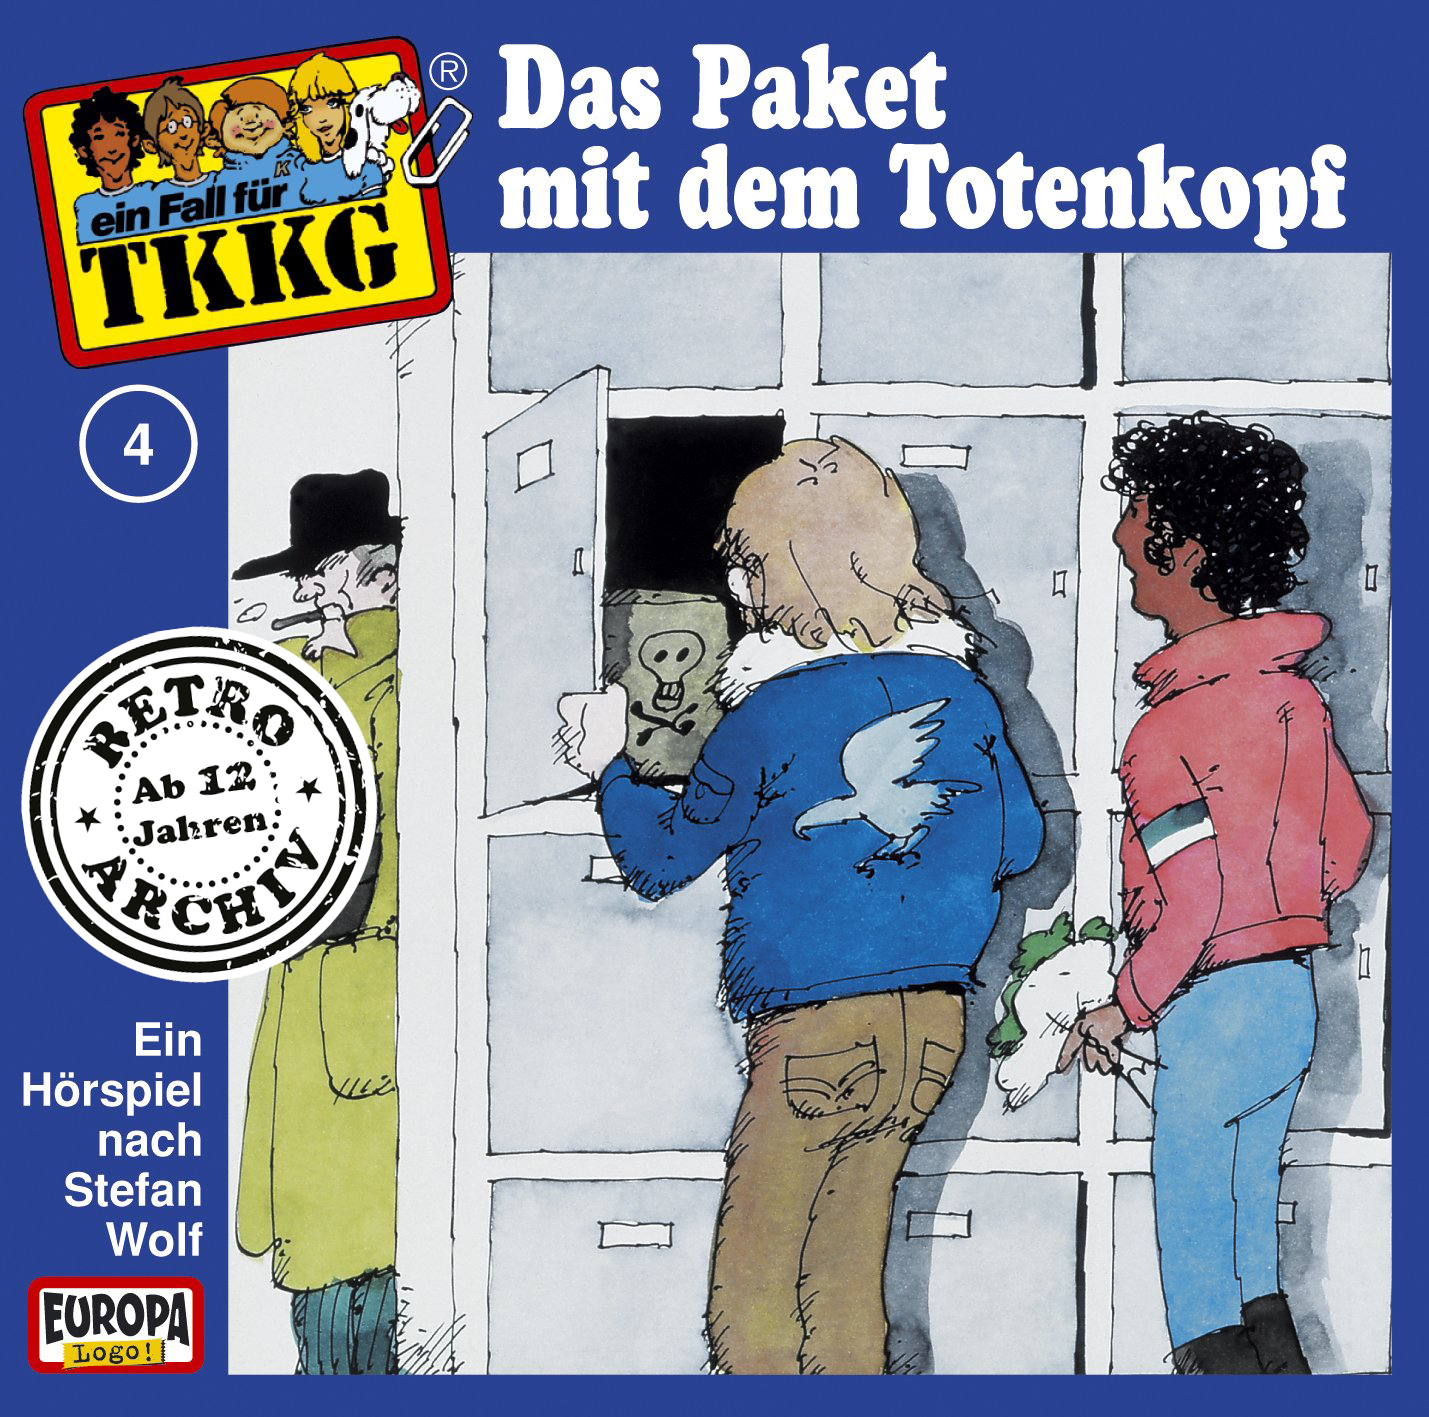 TKKG Retro-Archiv - Das Paket mit dem Totenkopf